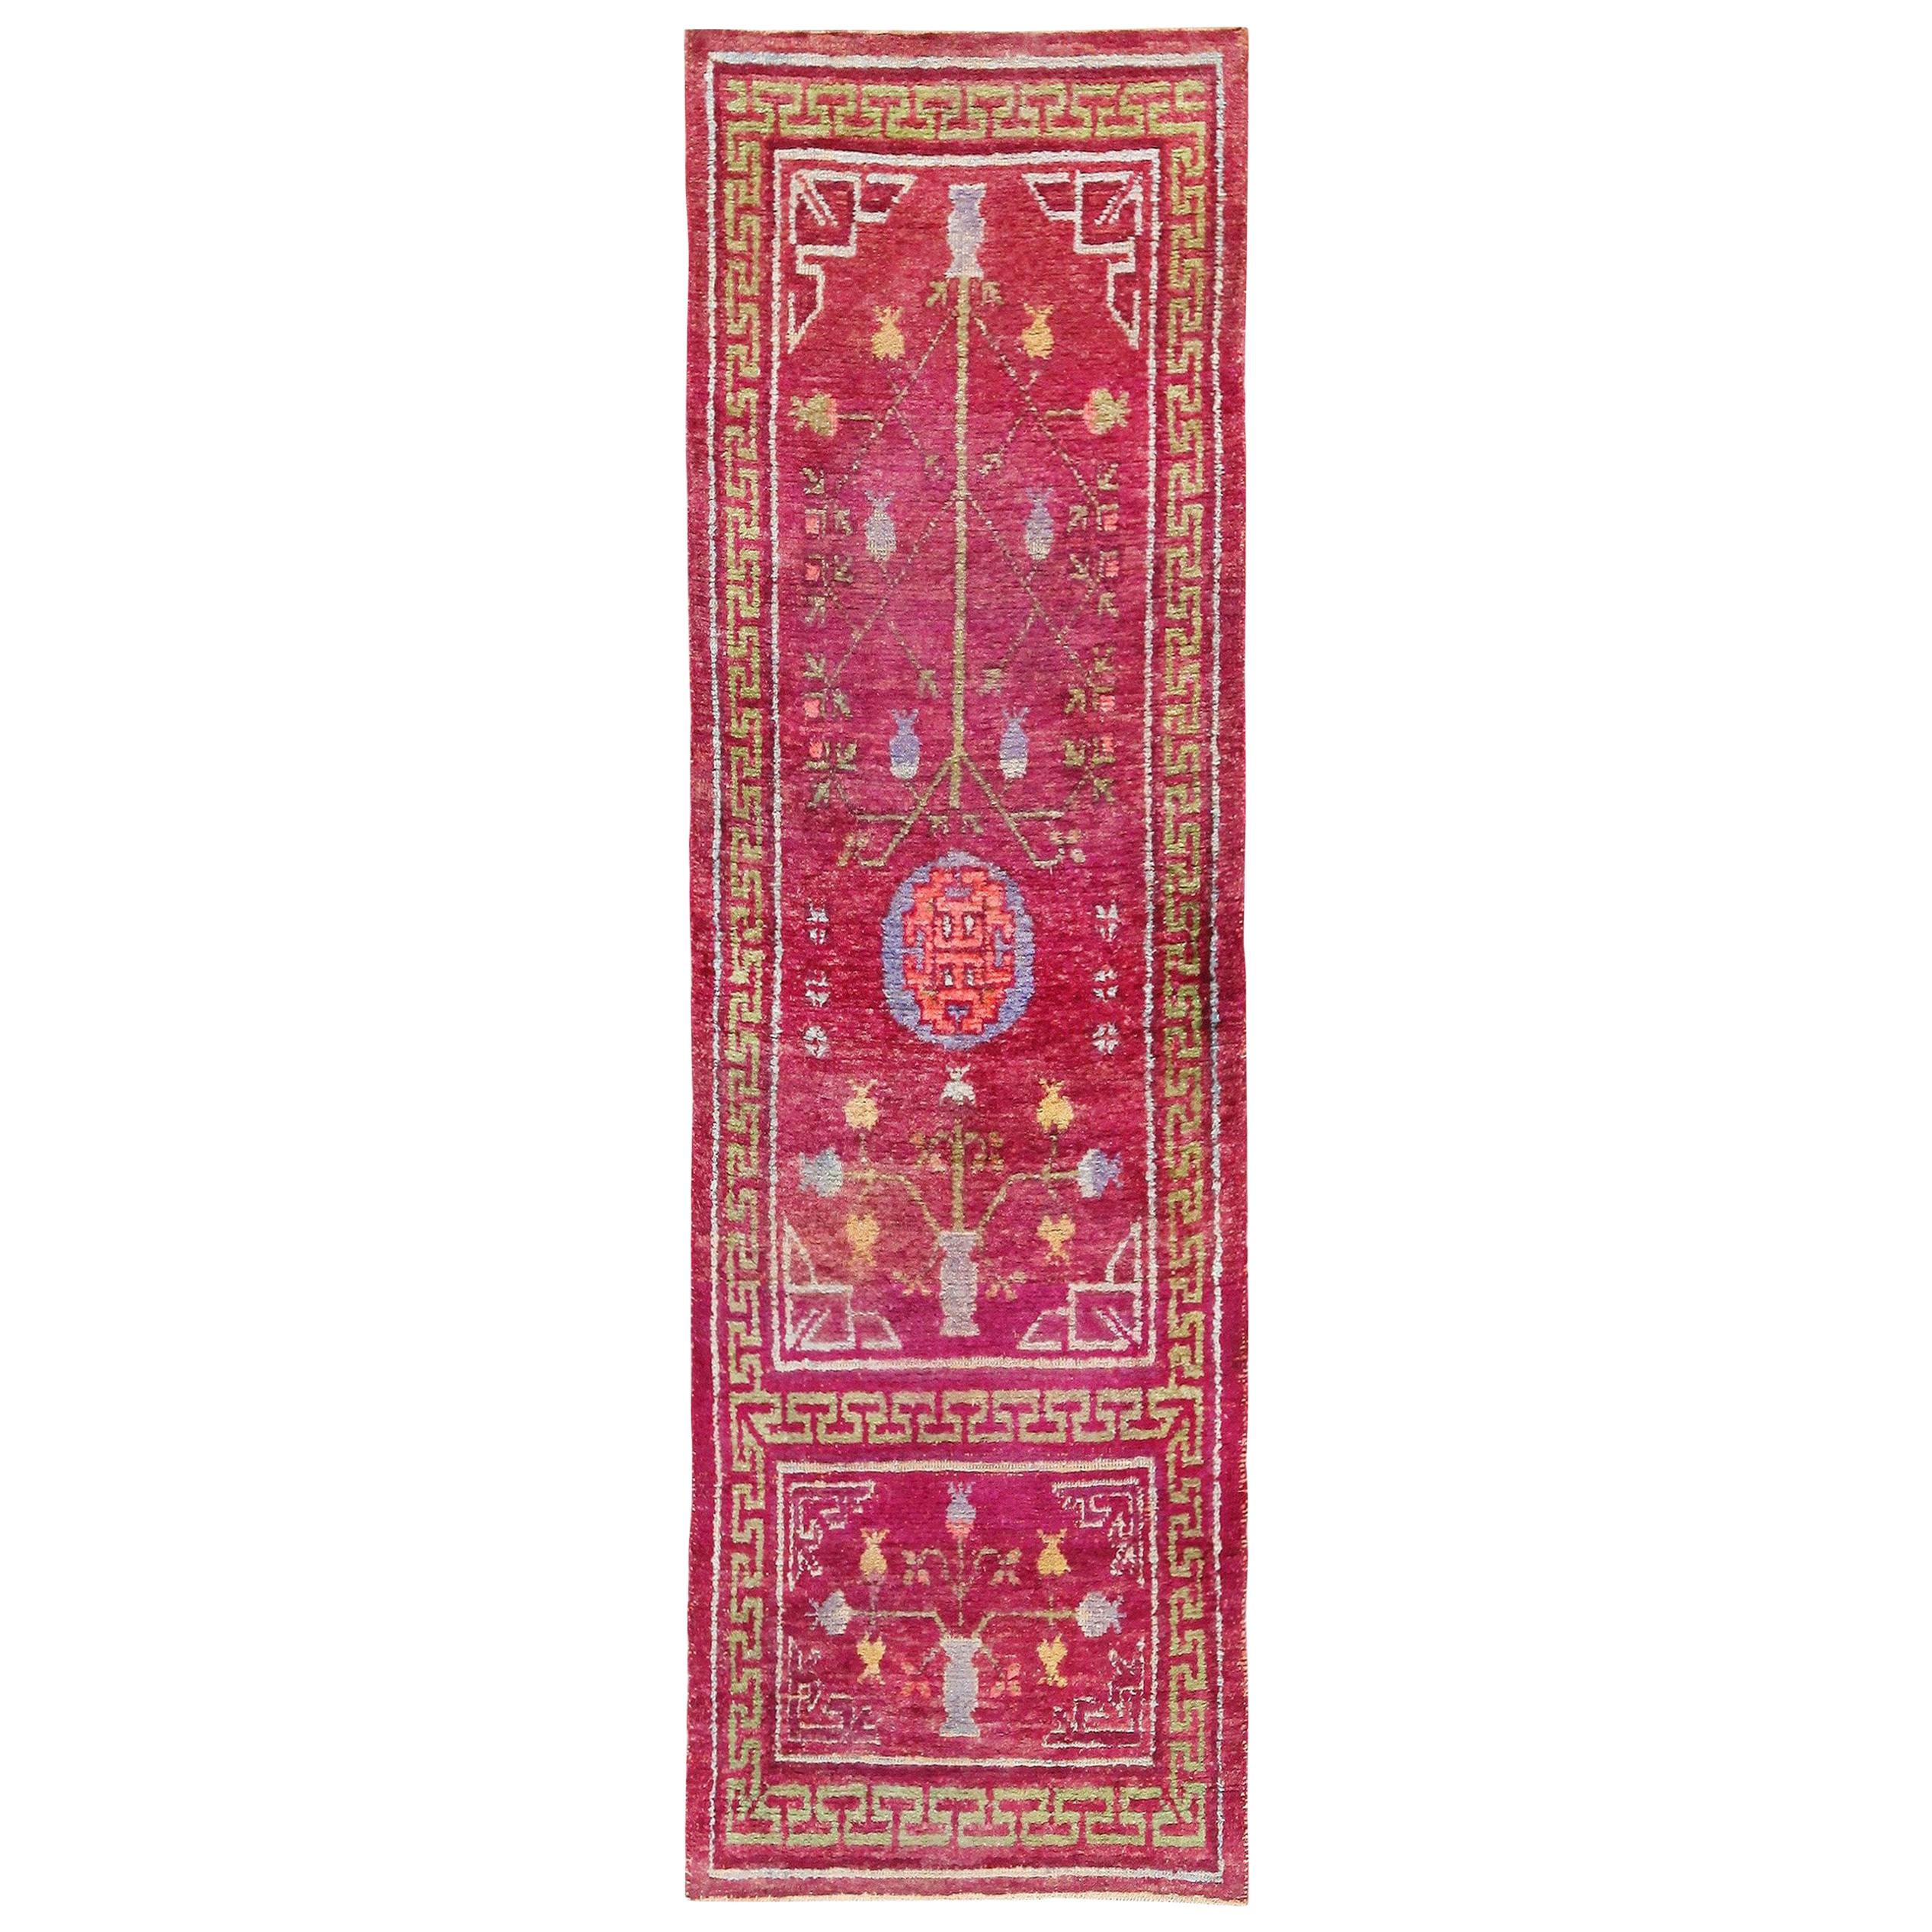 Small Pomegranate Design Antique Purple Silk Khotan Runner Rug